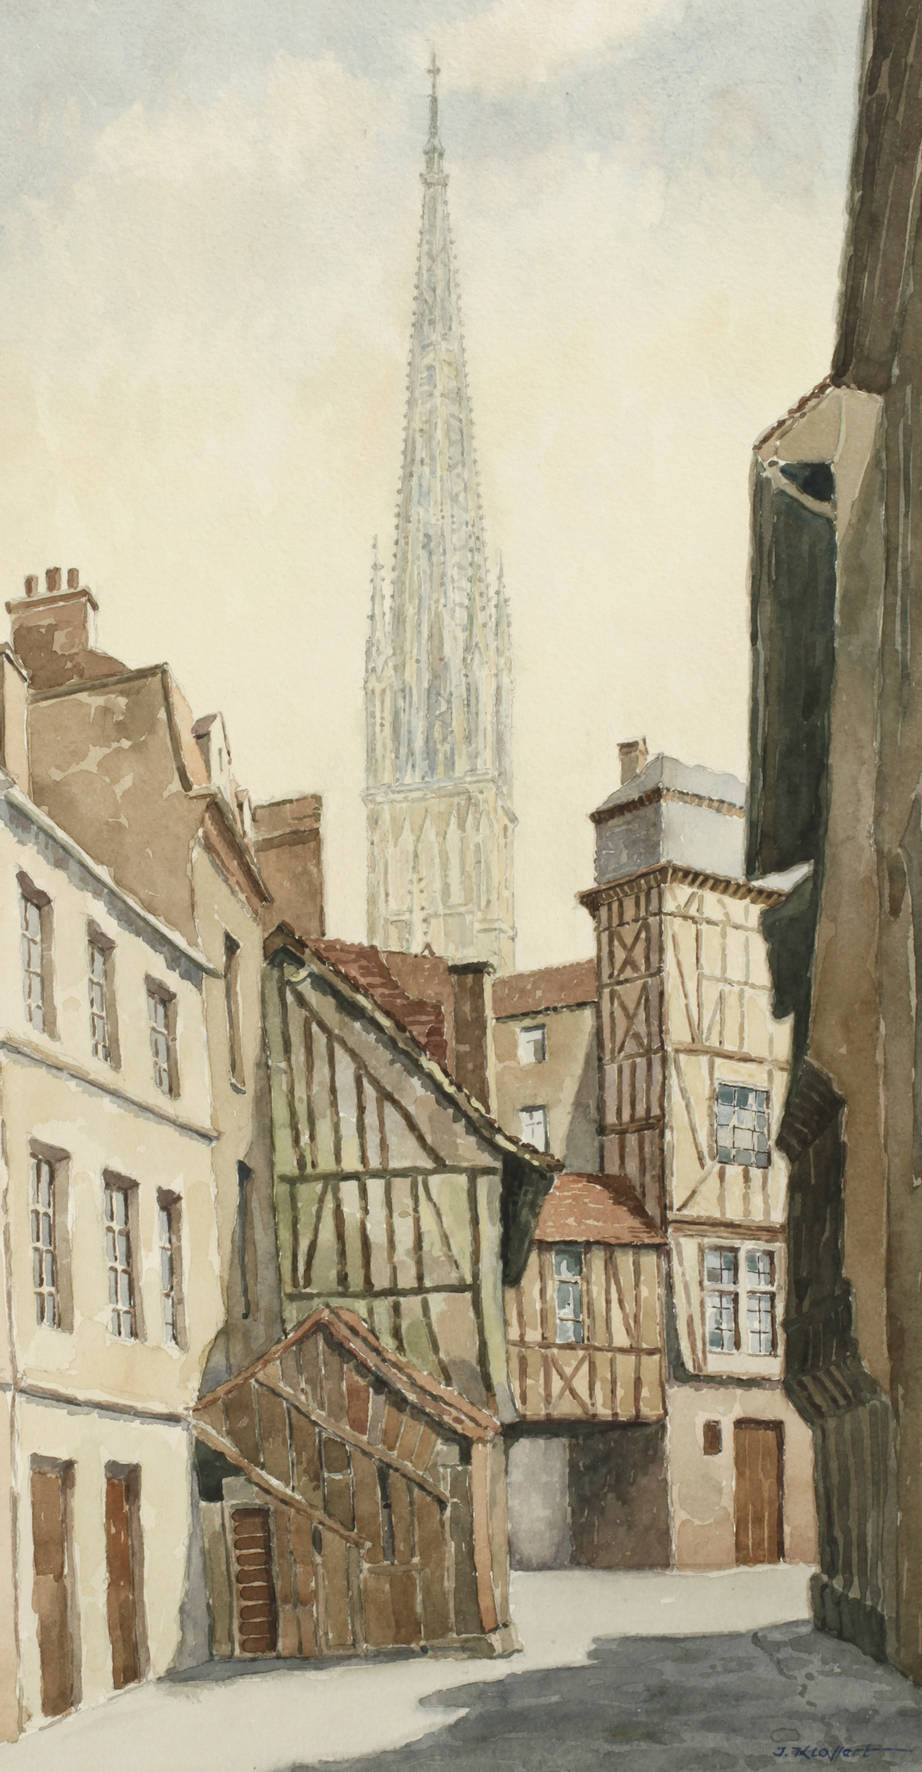 J. Klassert, ”Rouen”